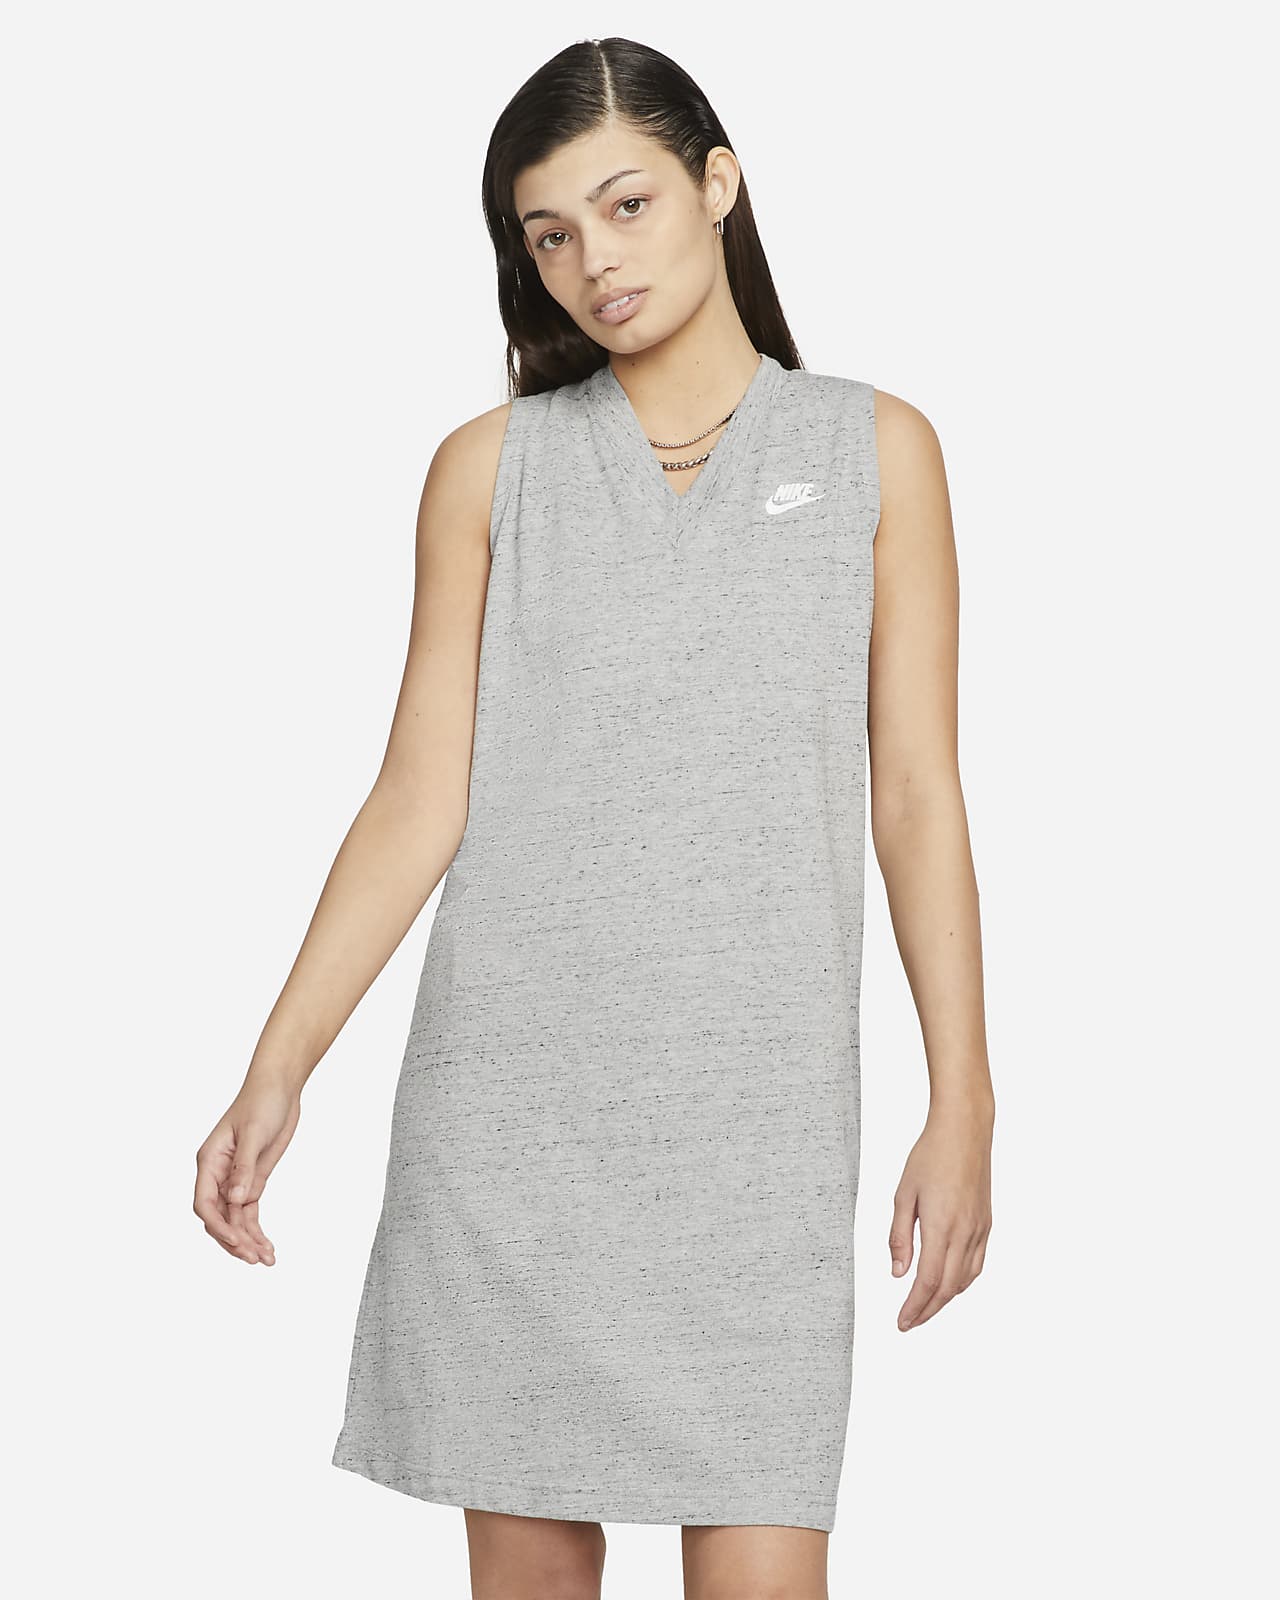 Nike Sportswear Gym Vintage Women's Sleeveless Dress